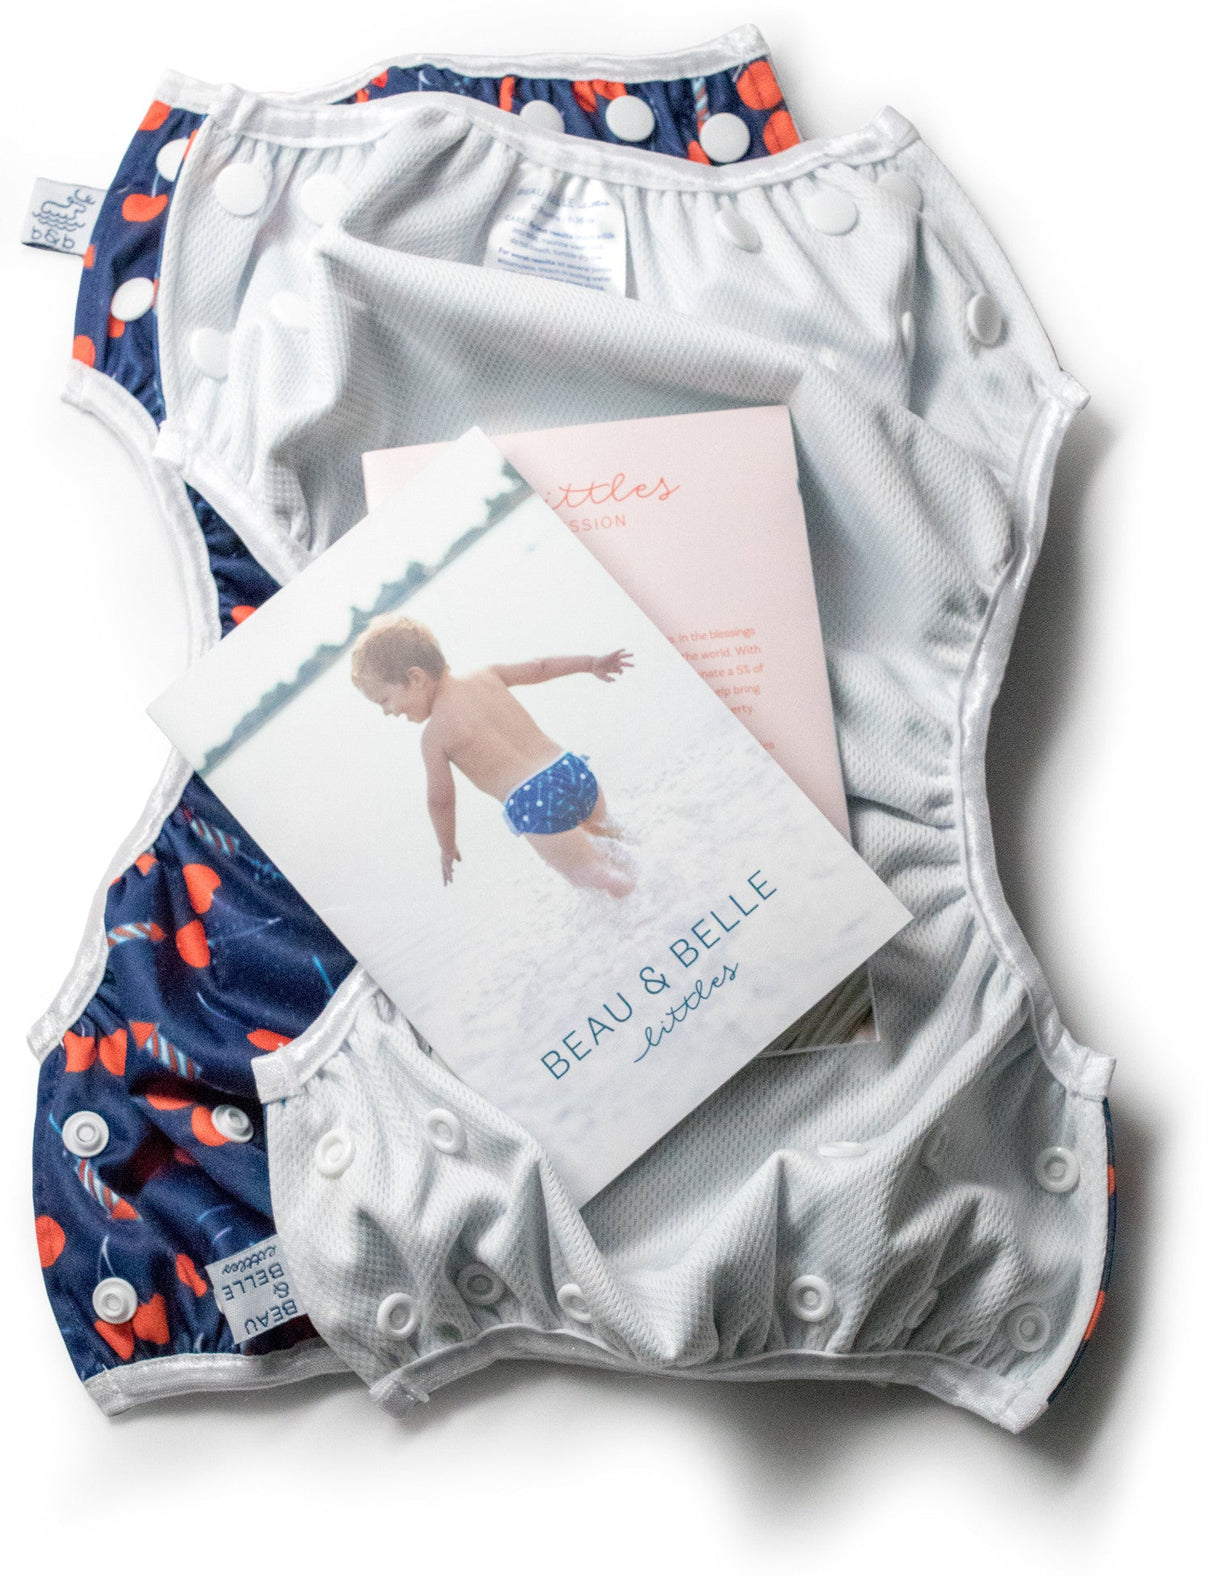 L/E Lauren Holiday Summer Cherry Bomb Print Nageuret Swim Diaper - 100% Proceeds to CF Foundation by Beau & Belle Littles